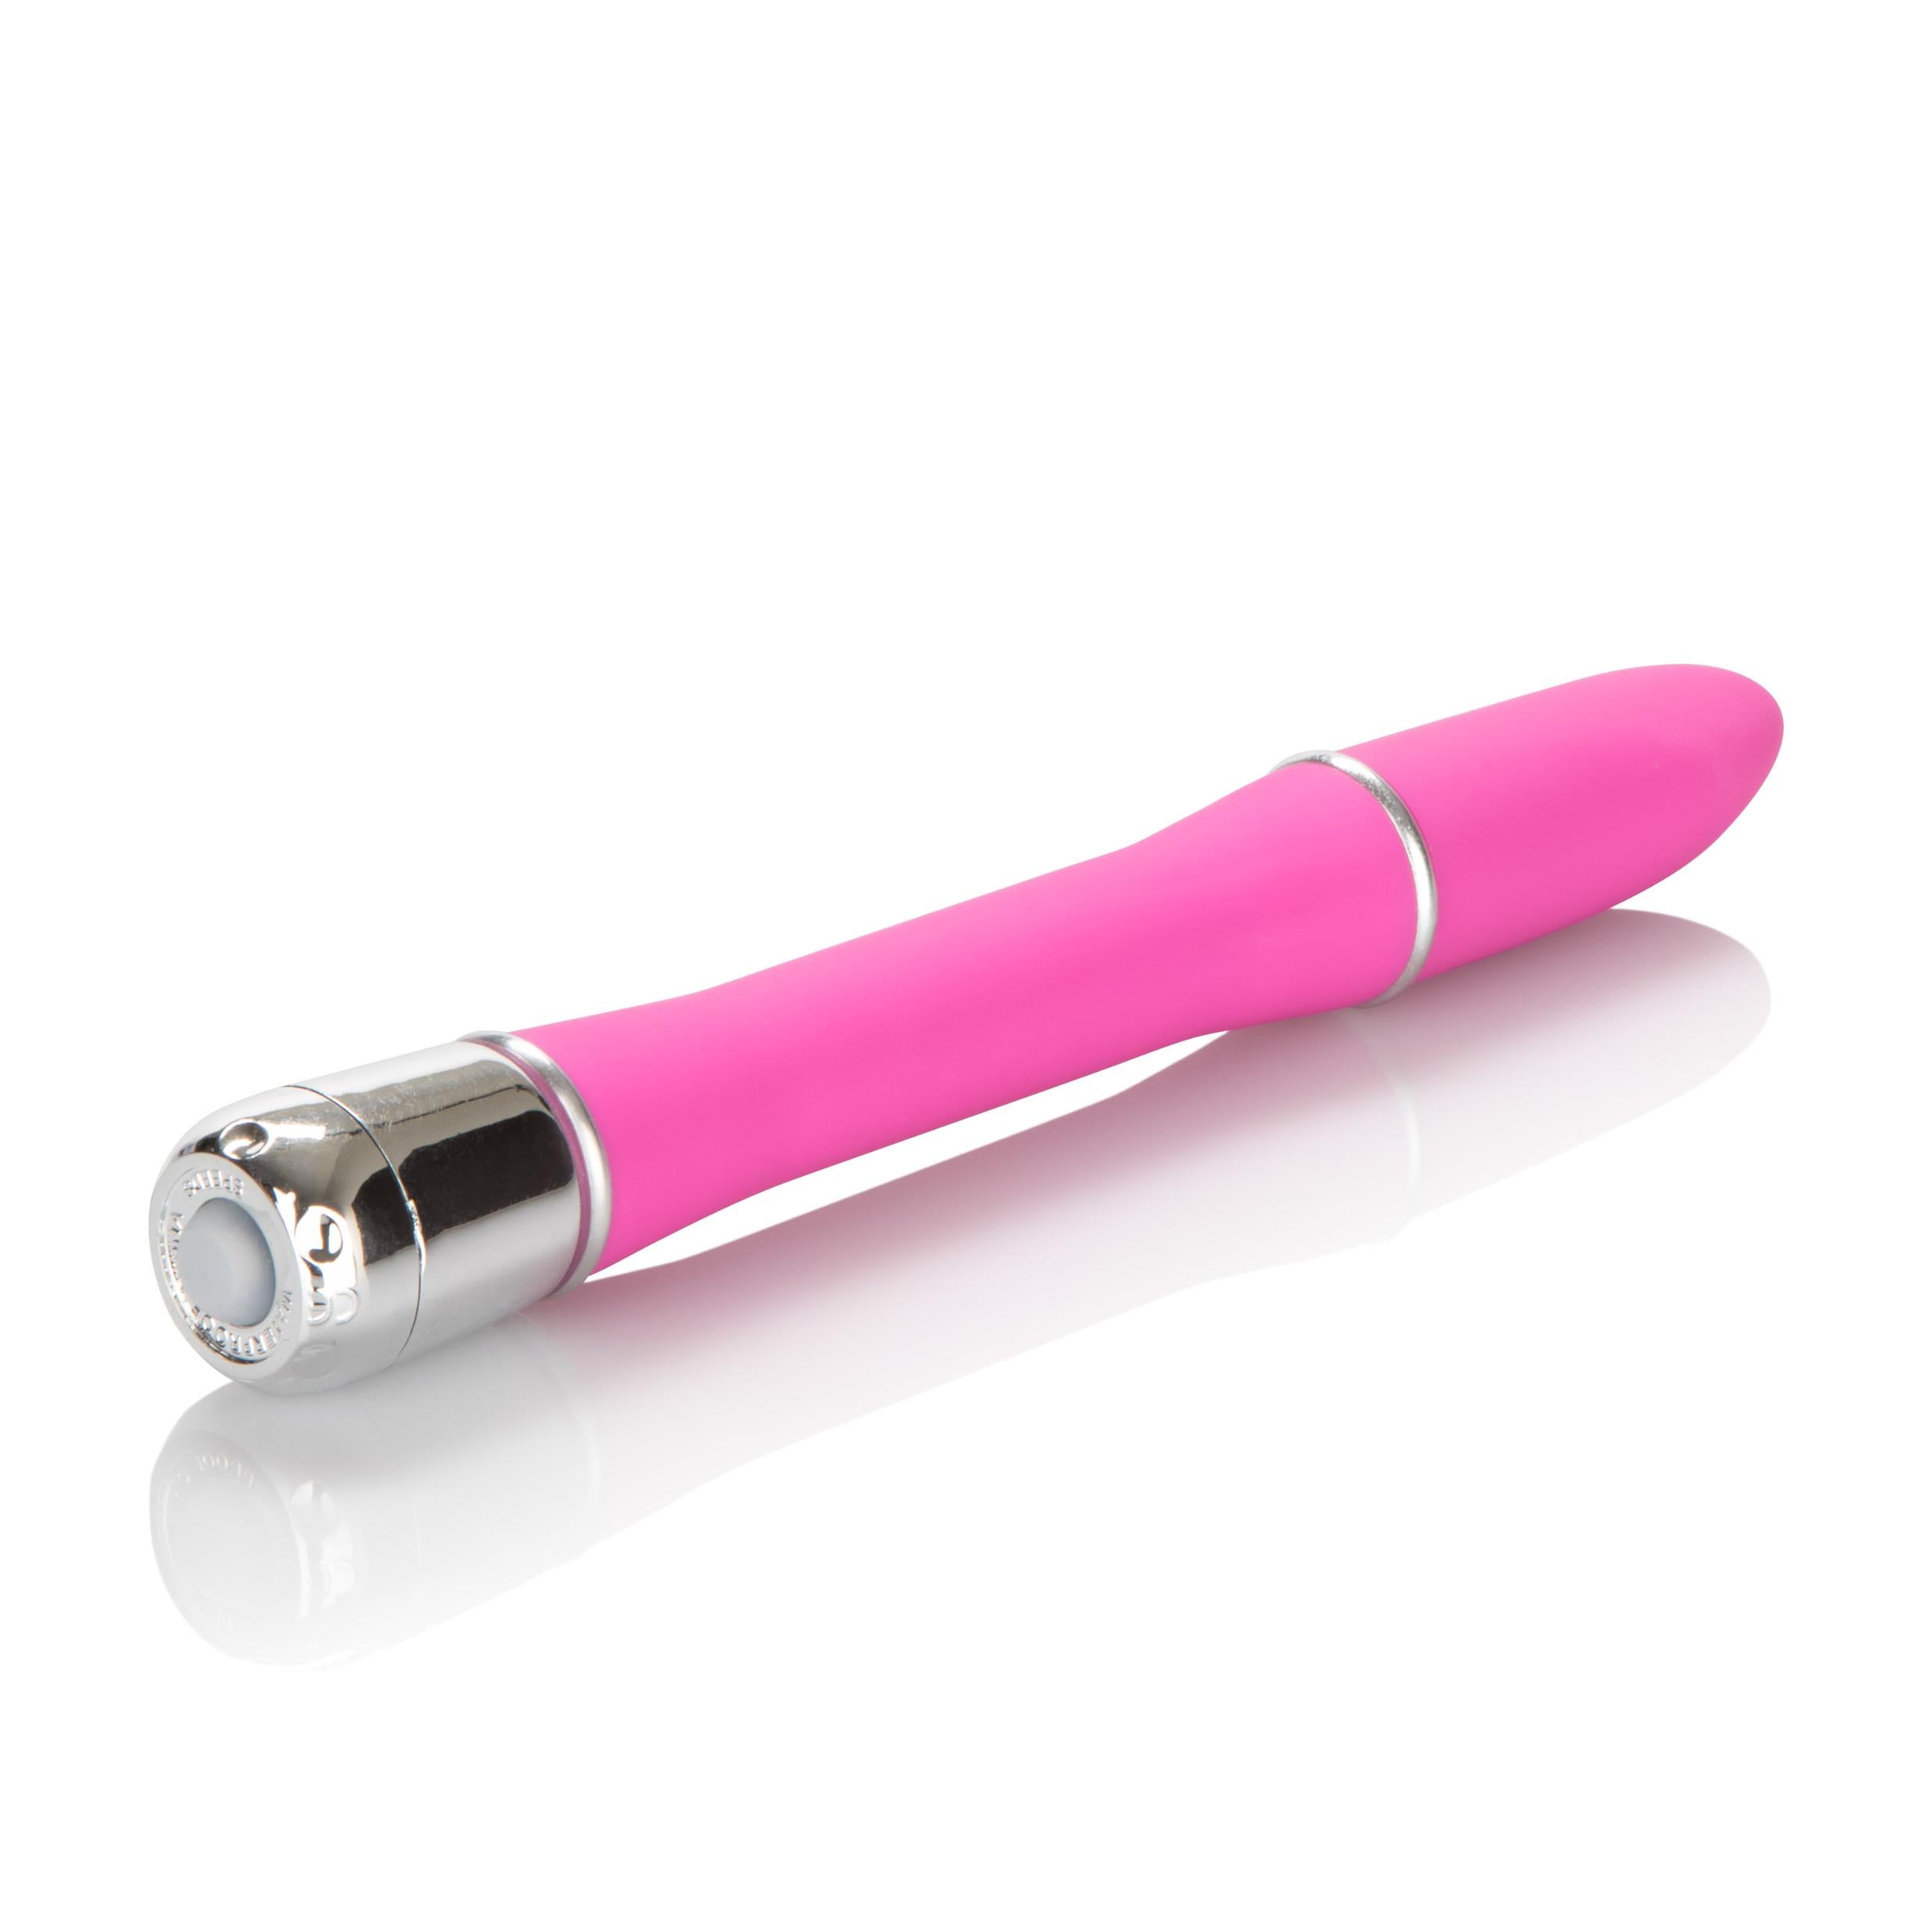 CalExotics Mini Vibrator - Lulu Satin Touch Pink